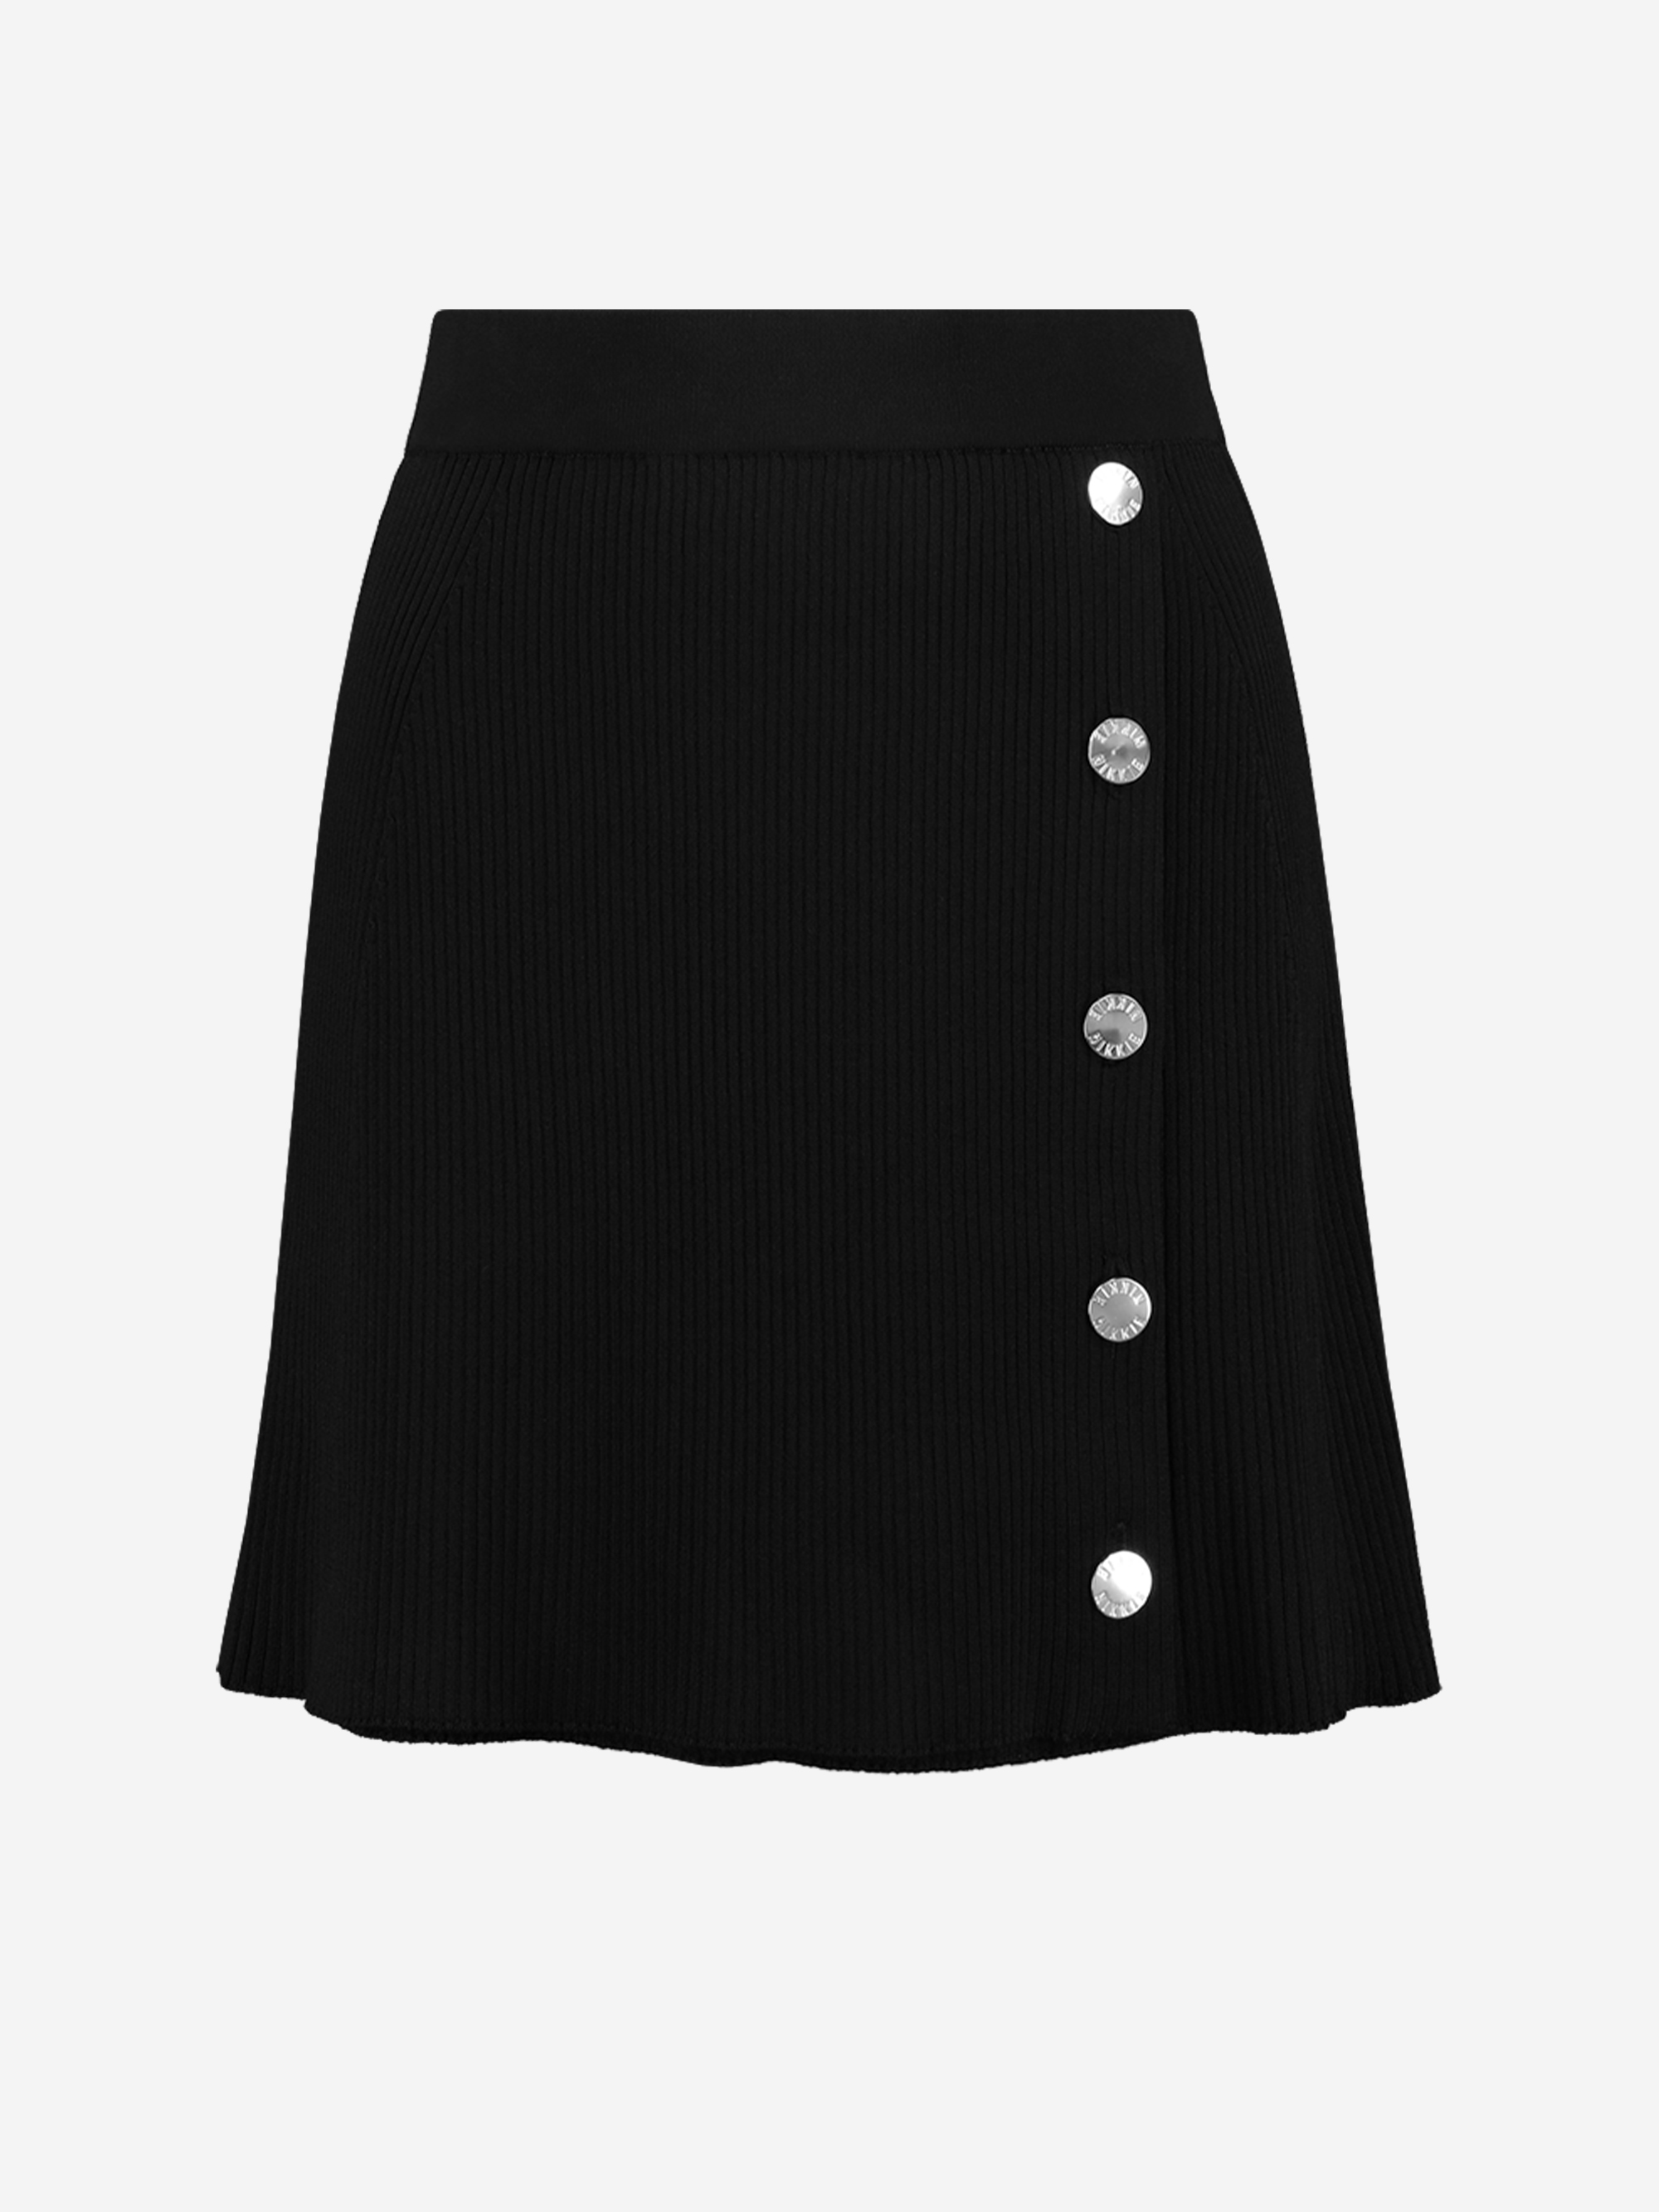 Kati Skirt